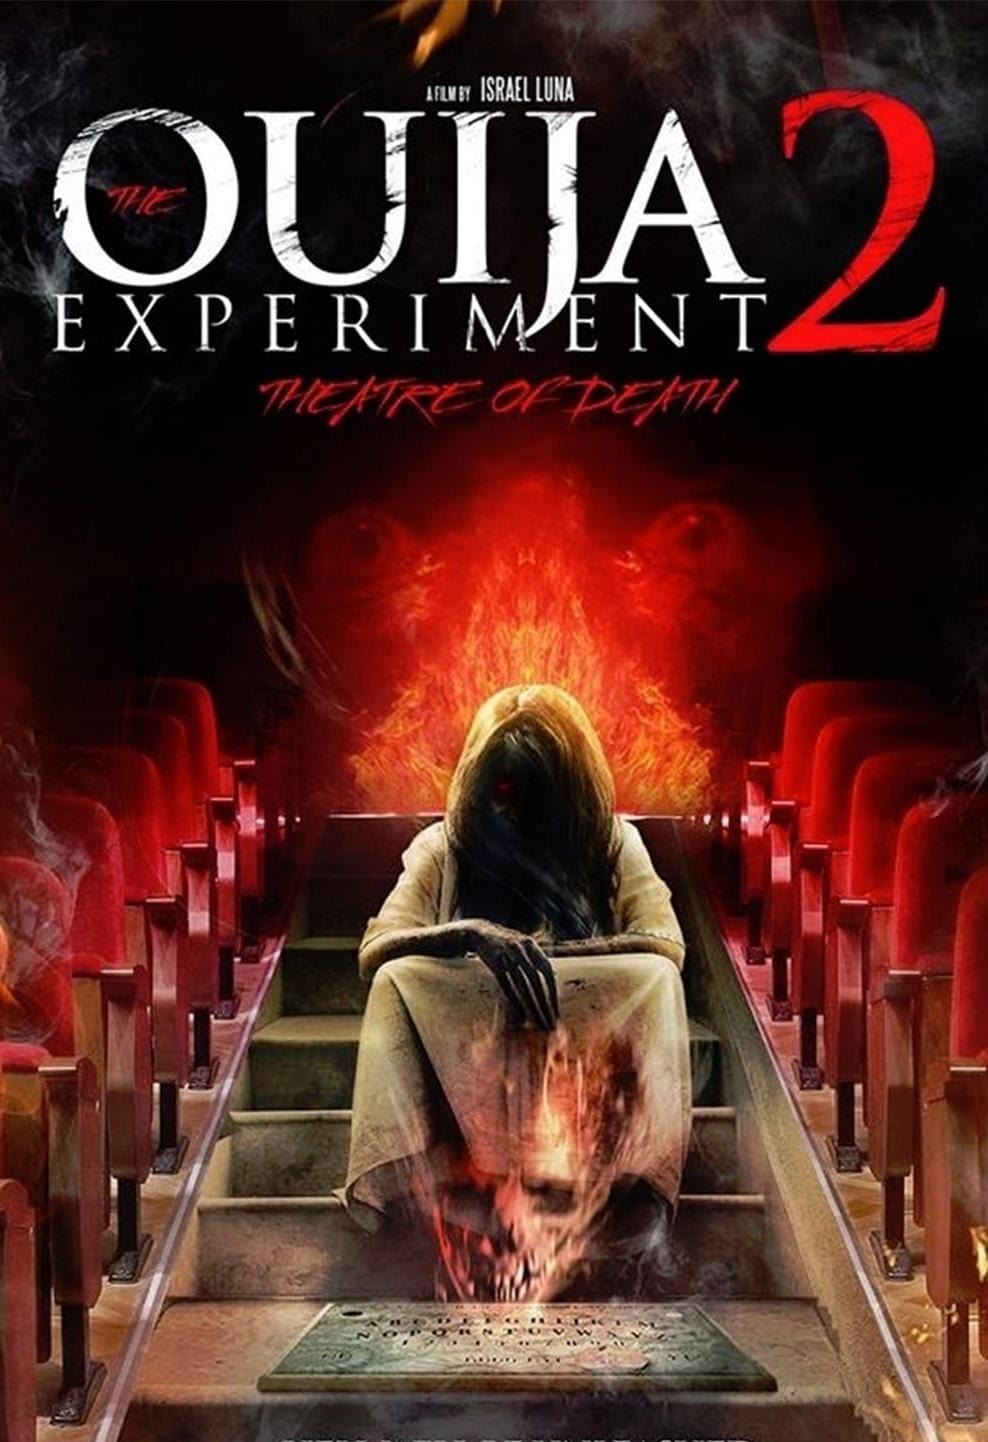 Das Ouija Experiment 2 - Theatre of Death (2015)